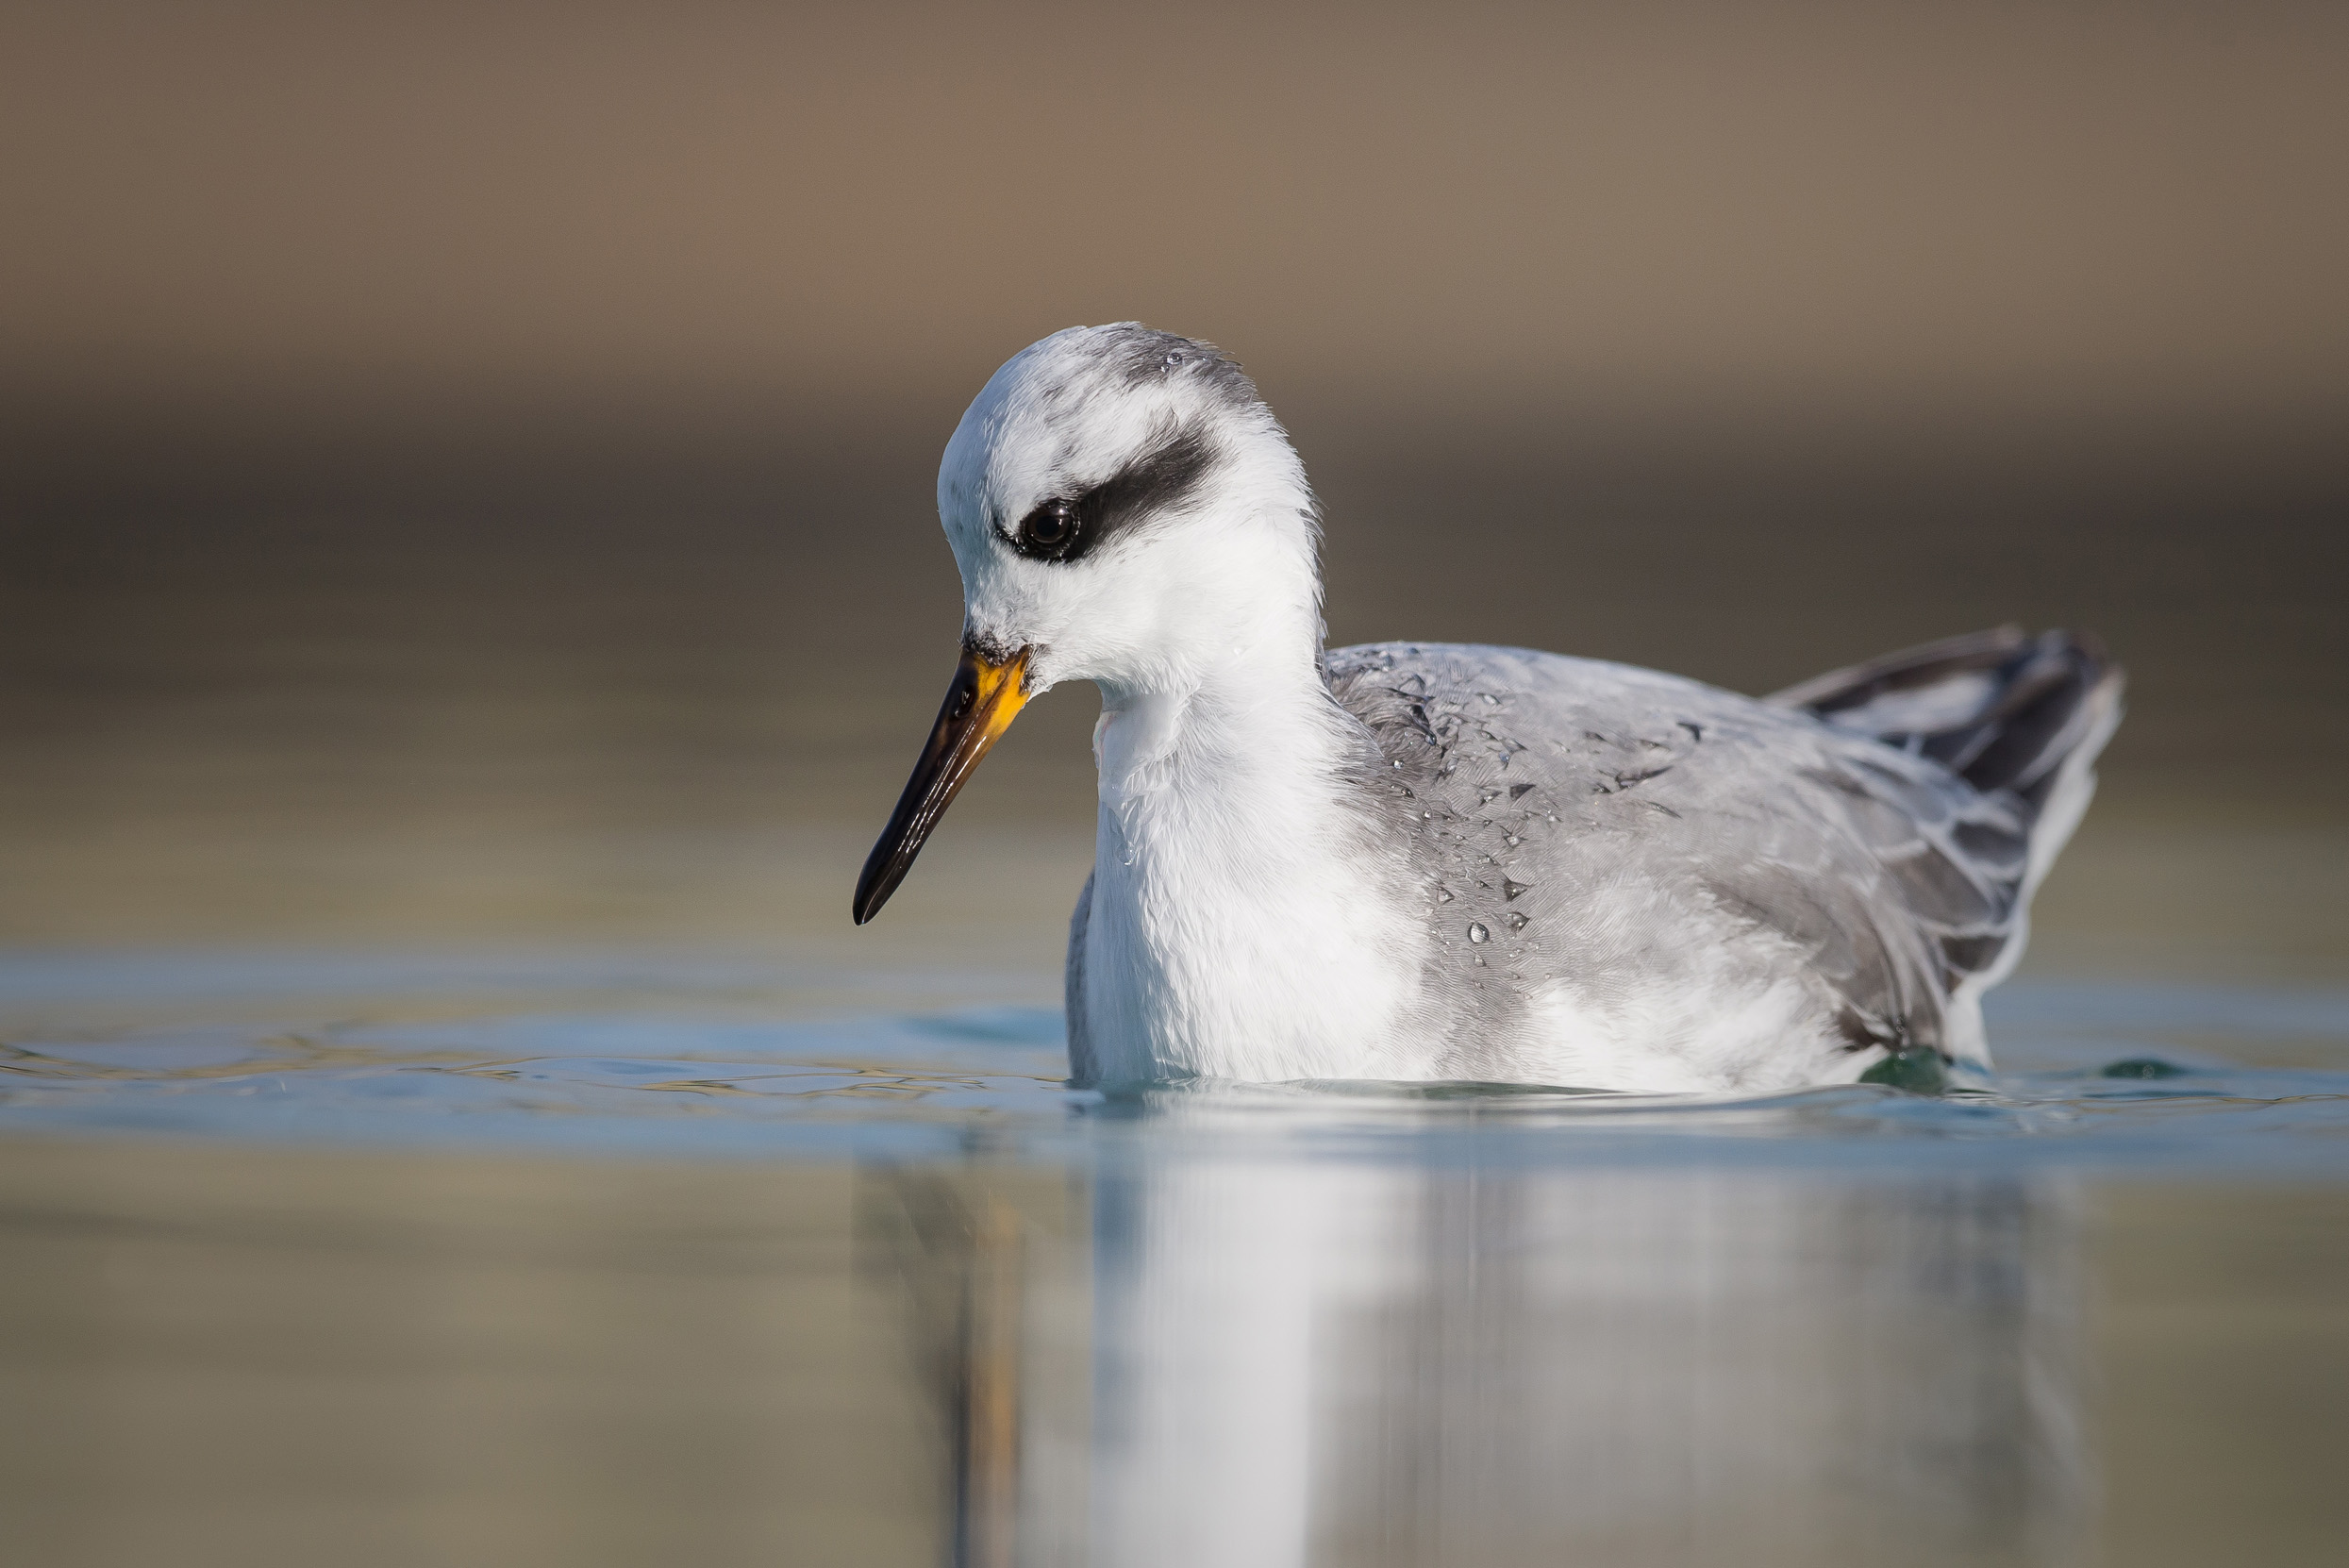 A Grey Phalarope in winter plumage swimming in water.